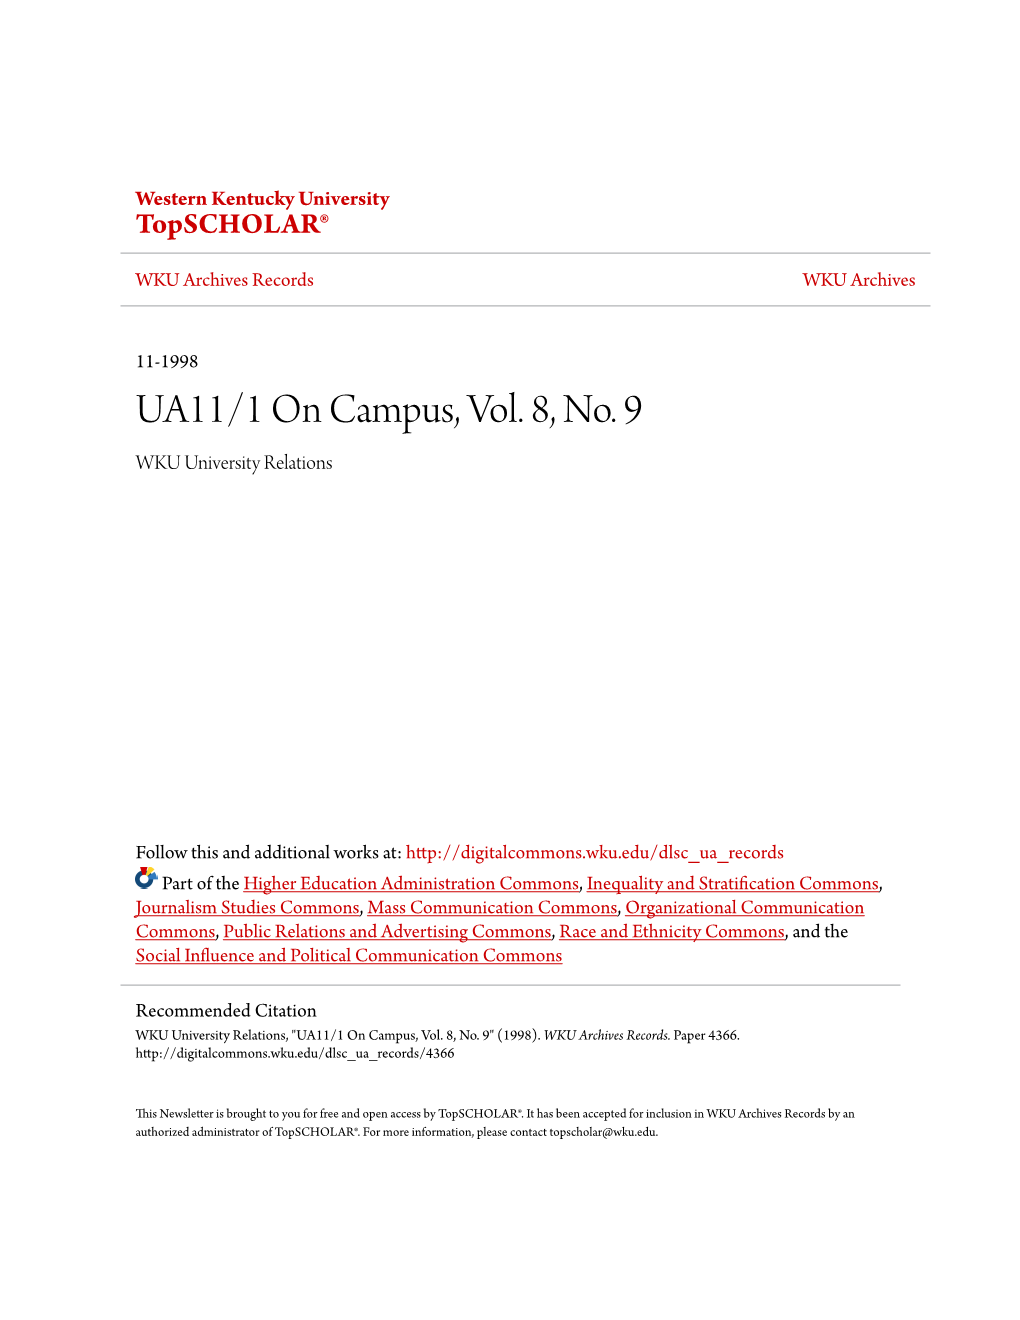 UA11/1 on Campus, Vol. 8, No. 9 WKU University Relations